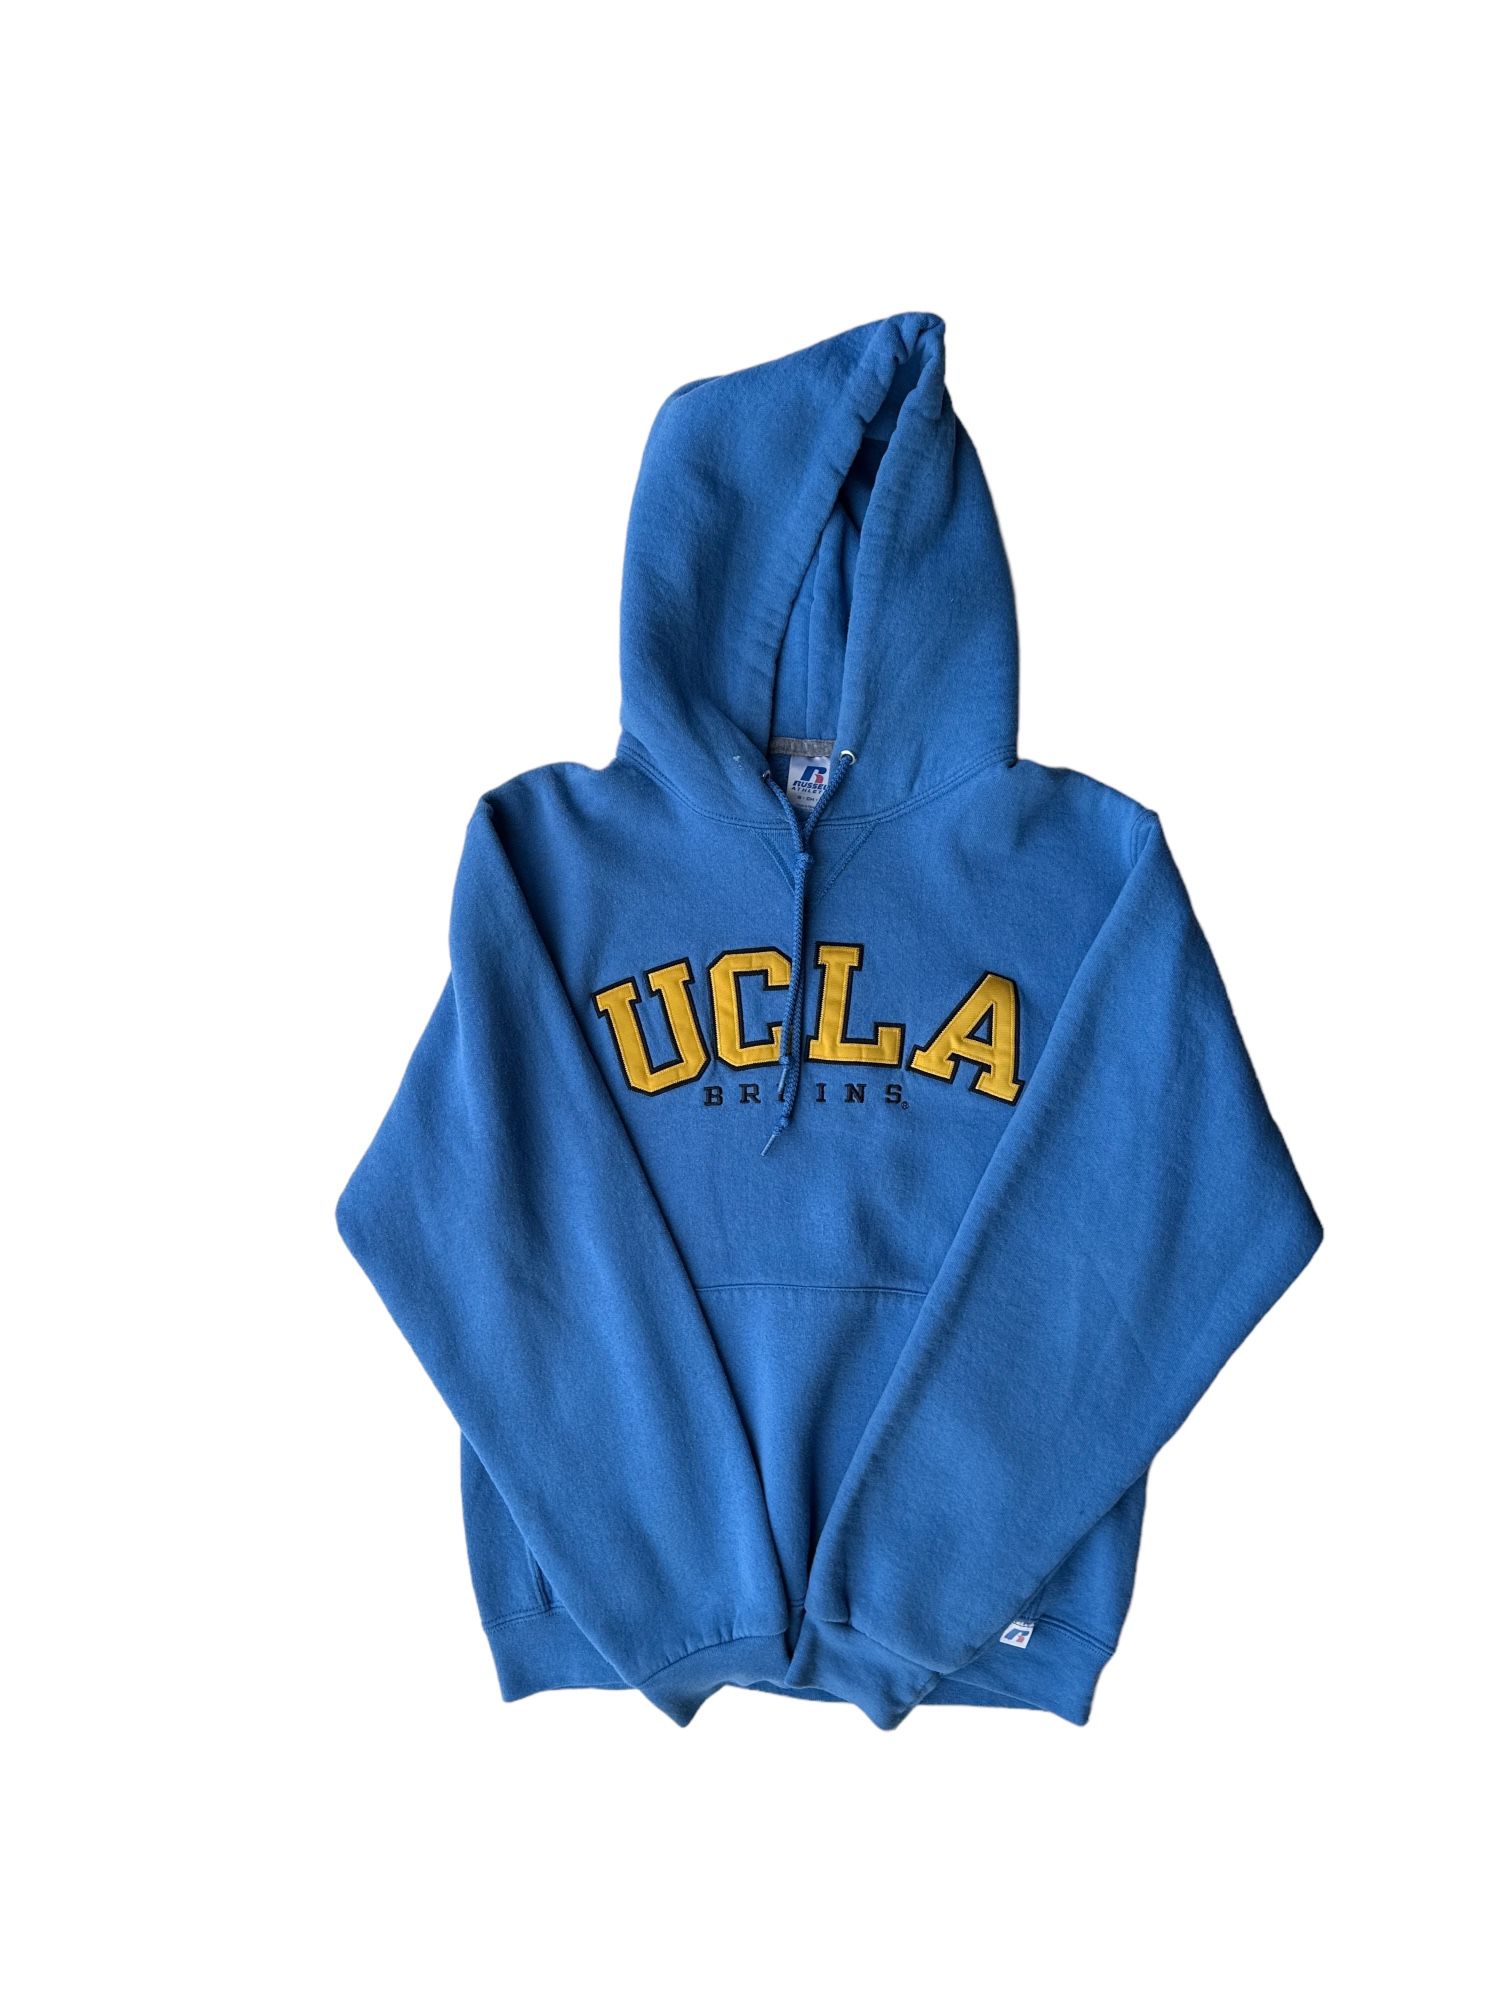 Vintage Russell Athletic Blue UCLA Hoodie Sweatshirt Small